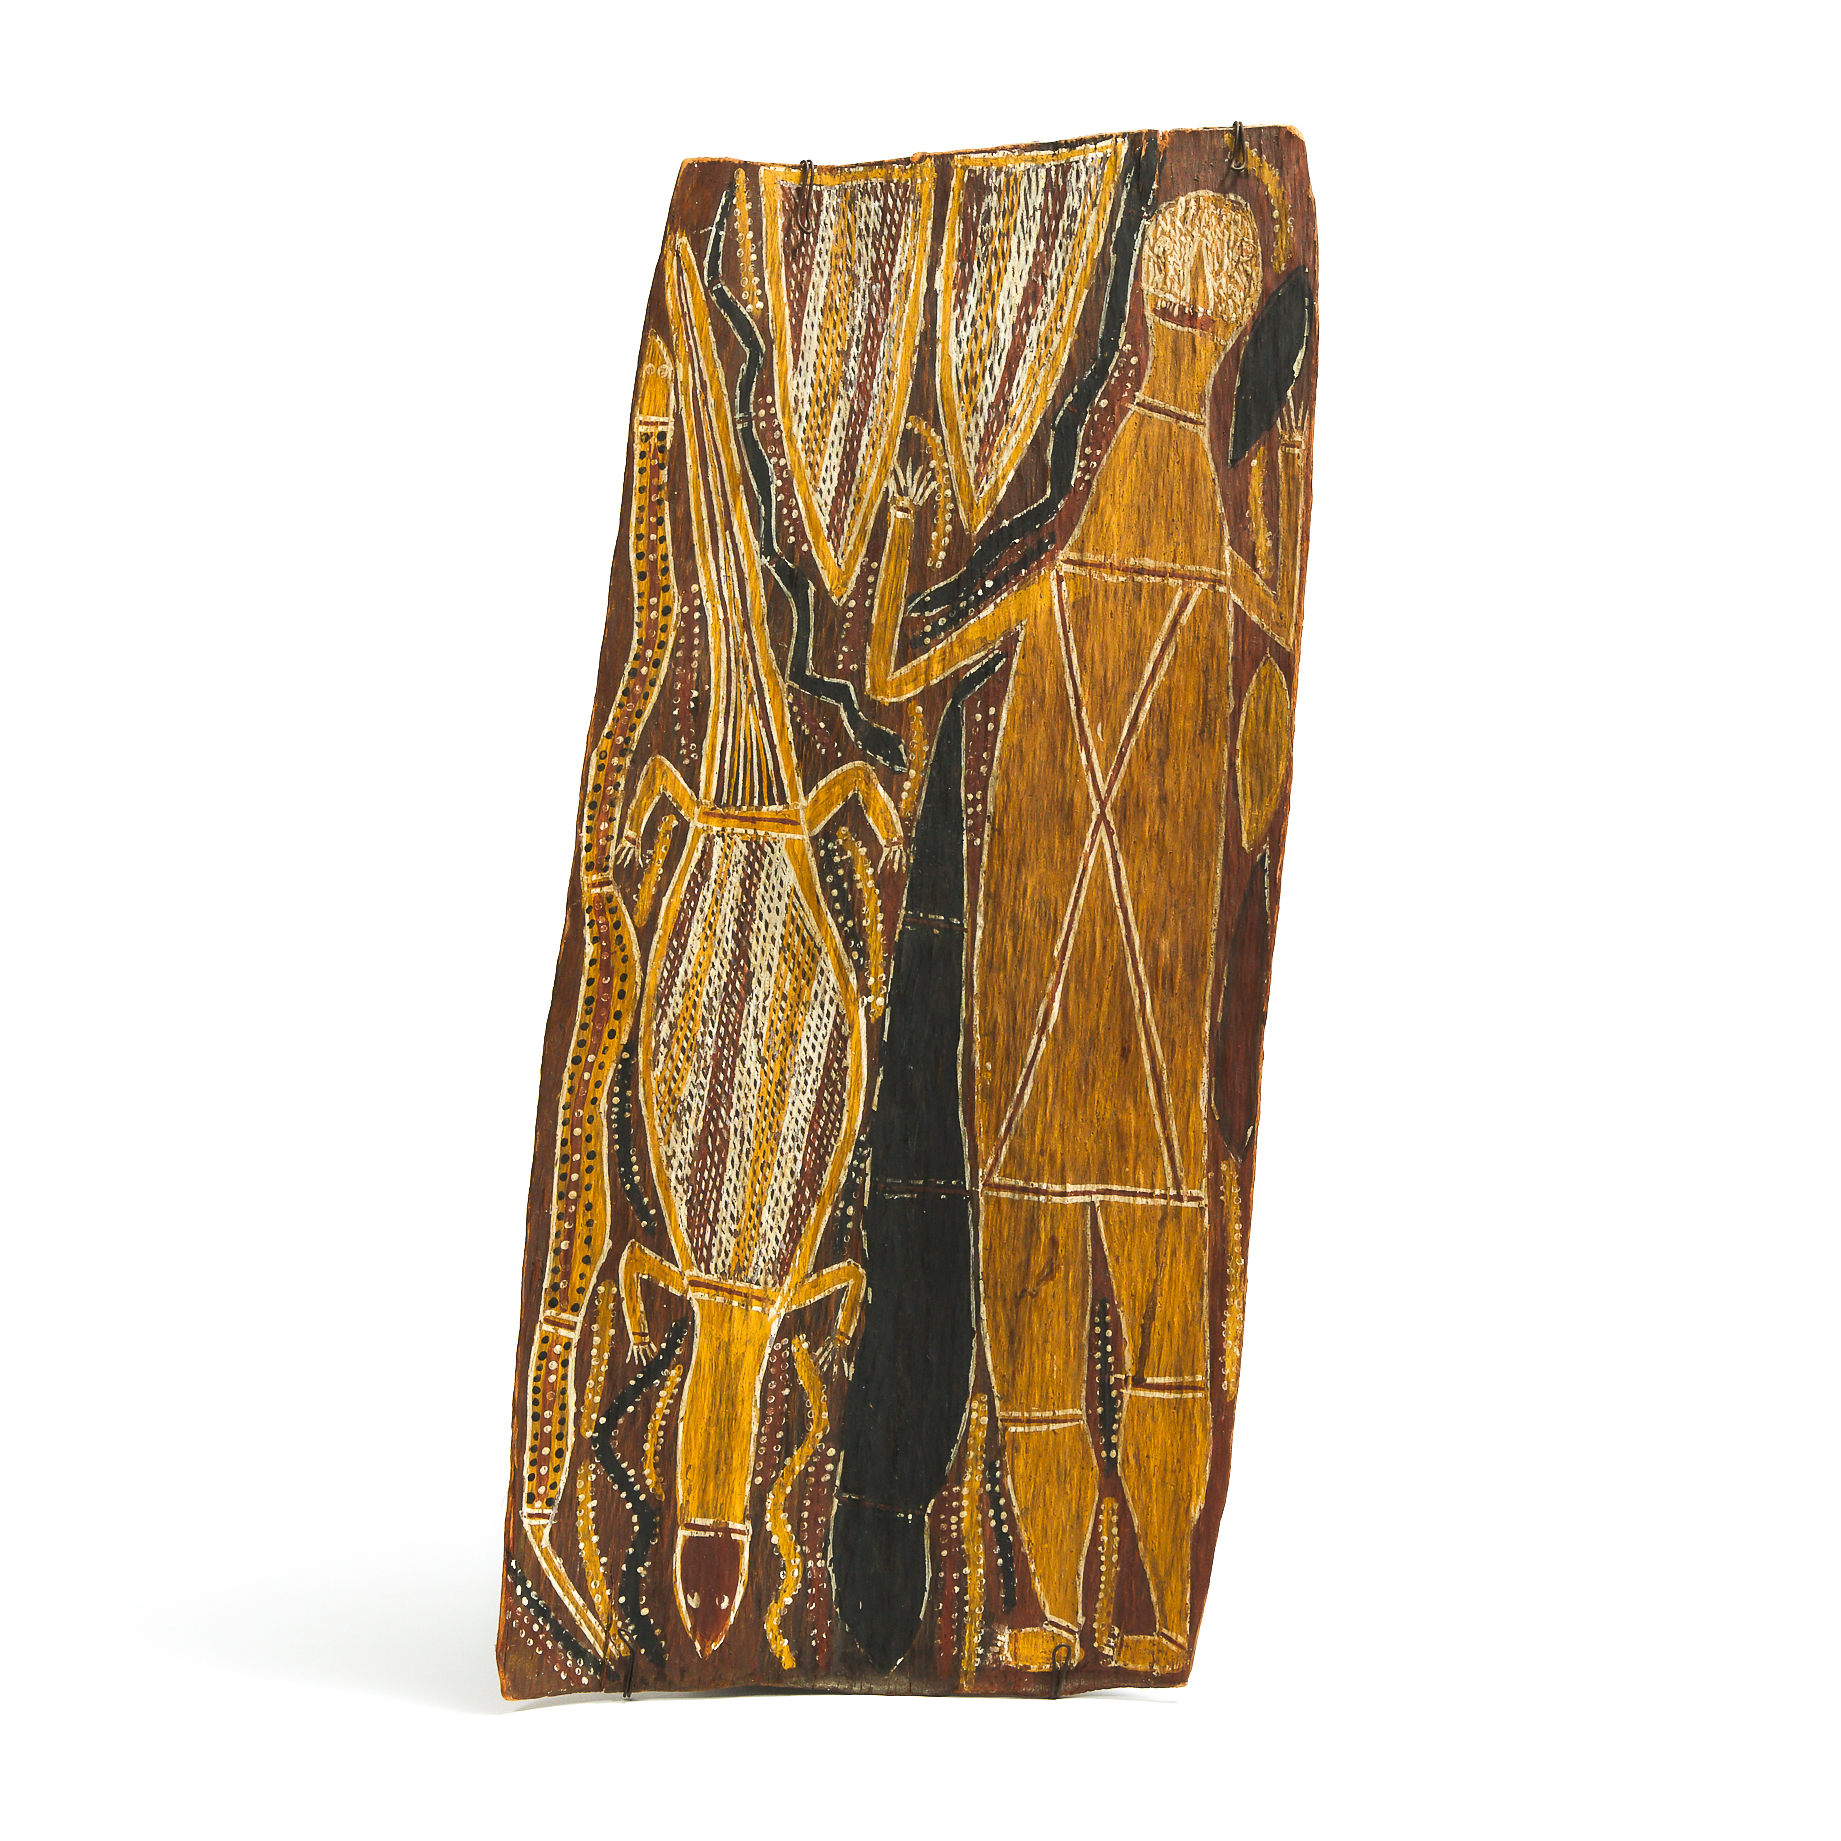 Australian Aboriginal Bark Painting, 20th century